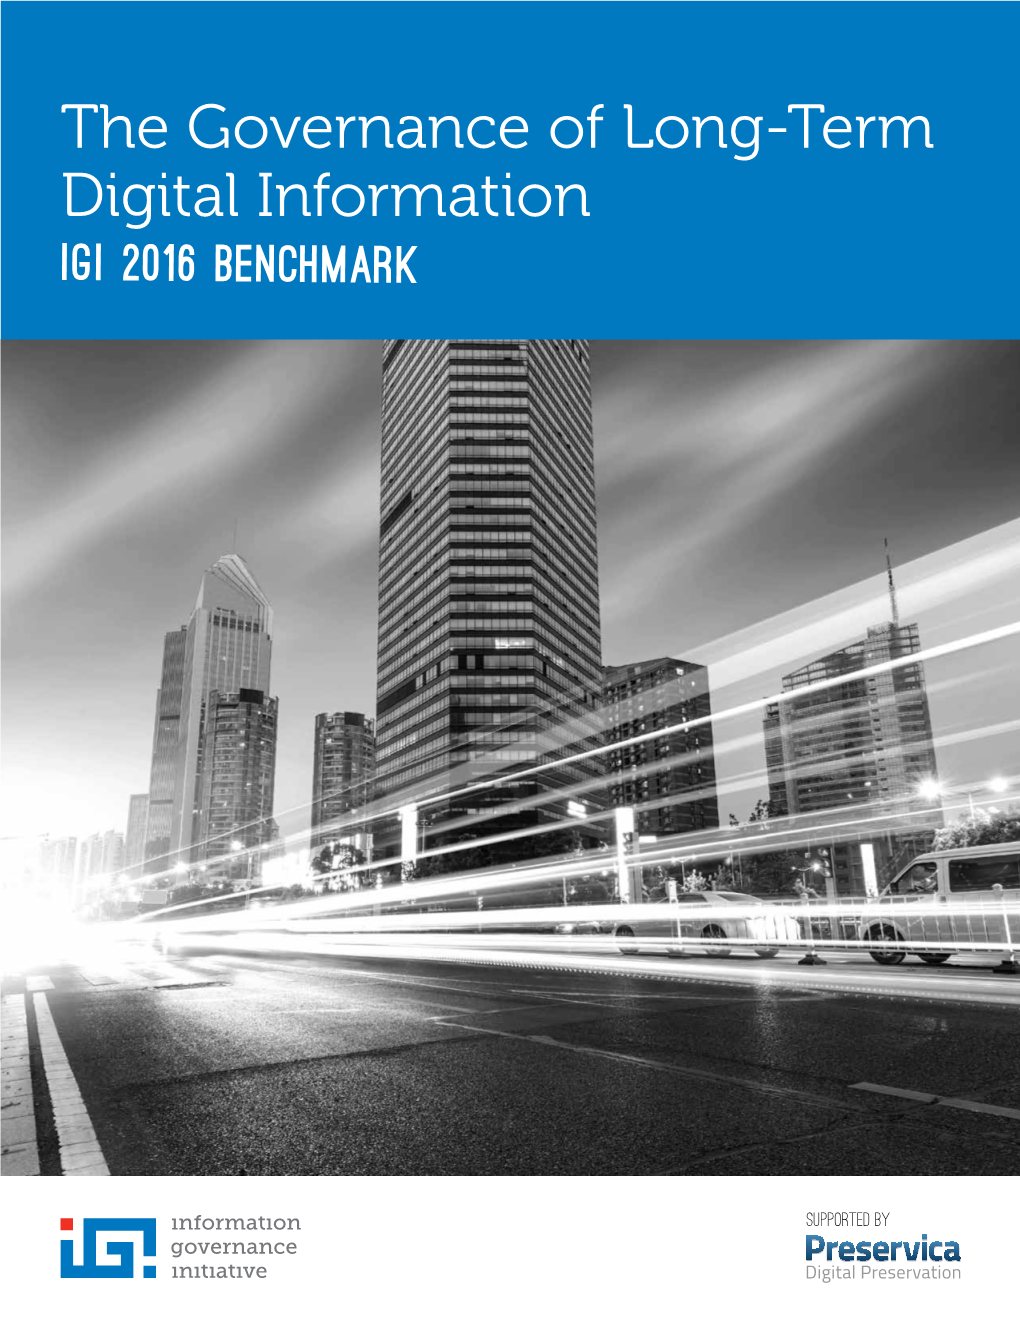 The Governance of Long-Term Digital Information, IGI 2016